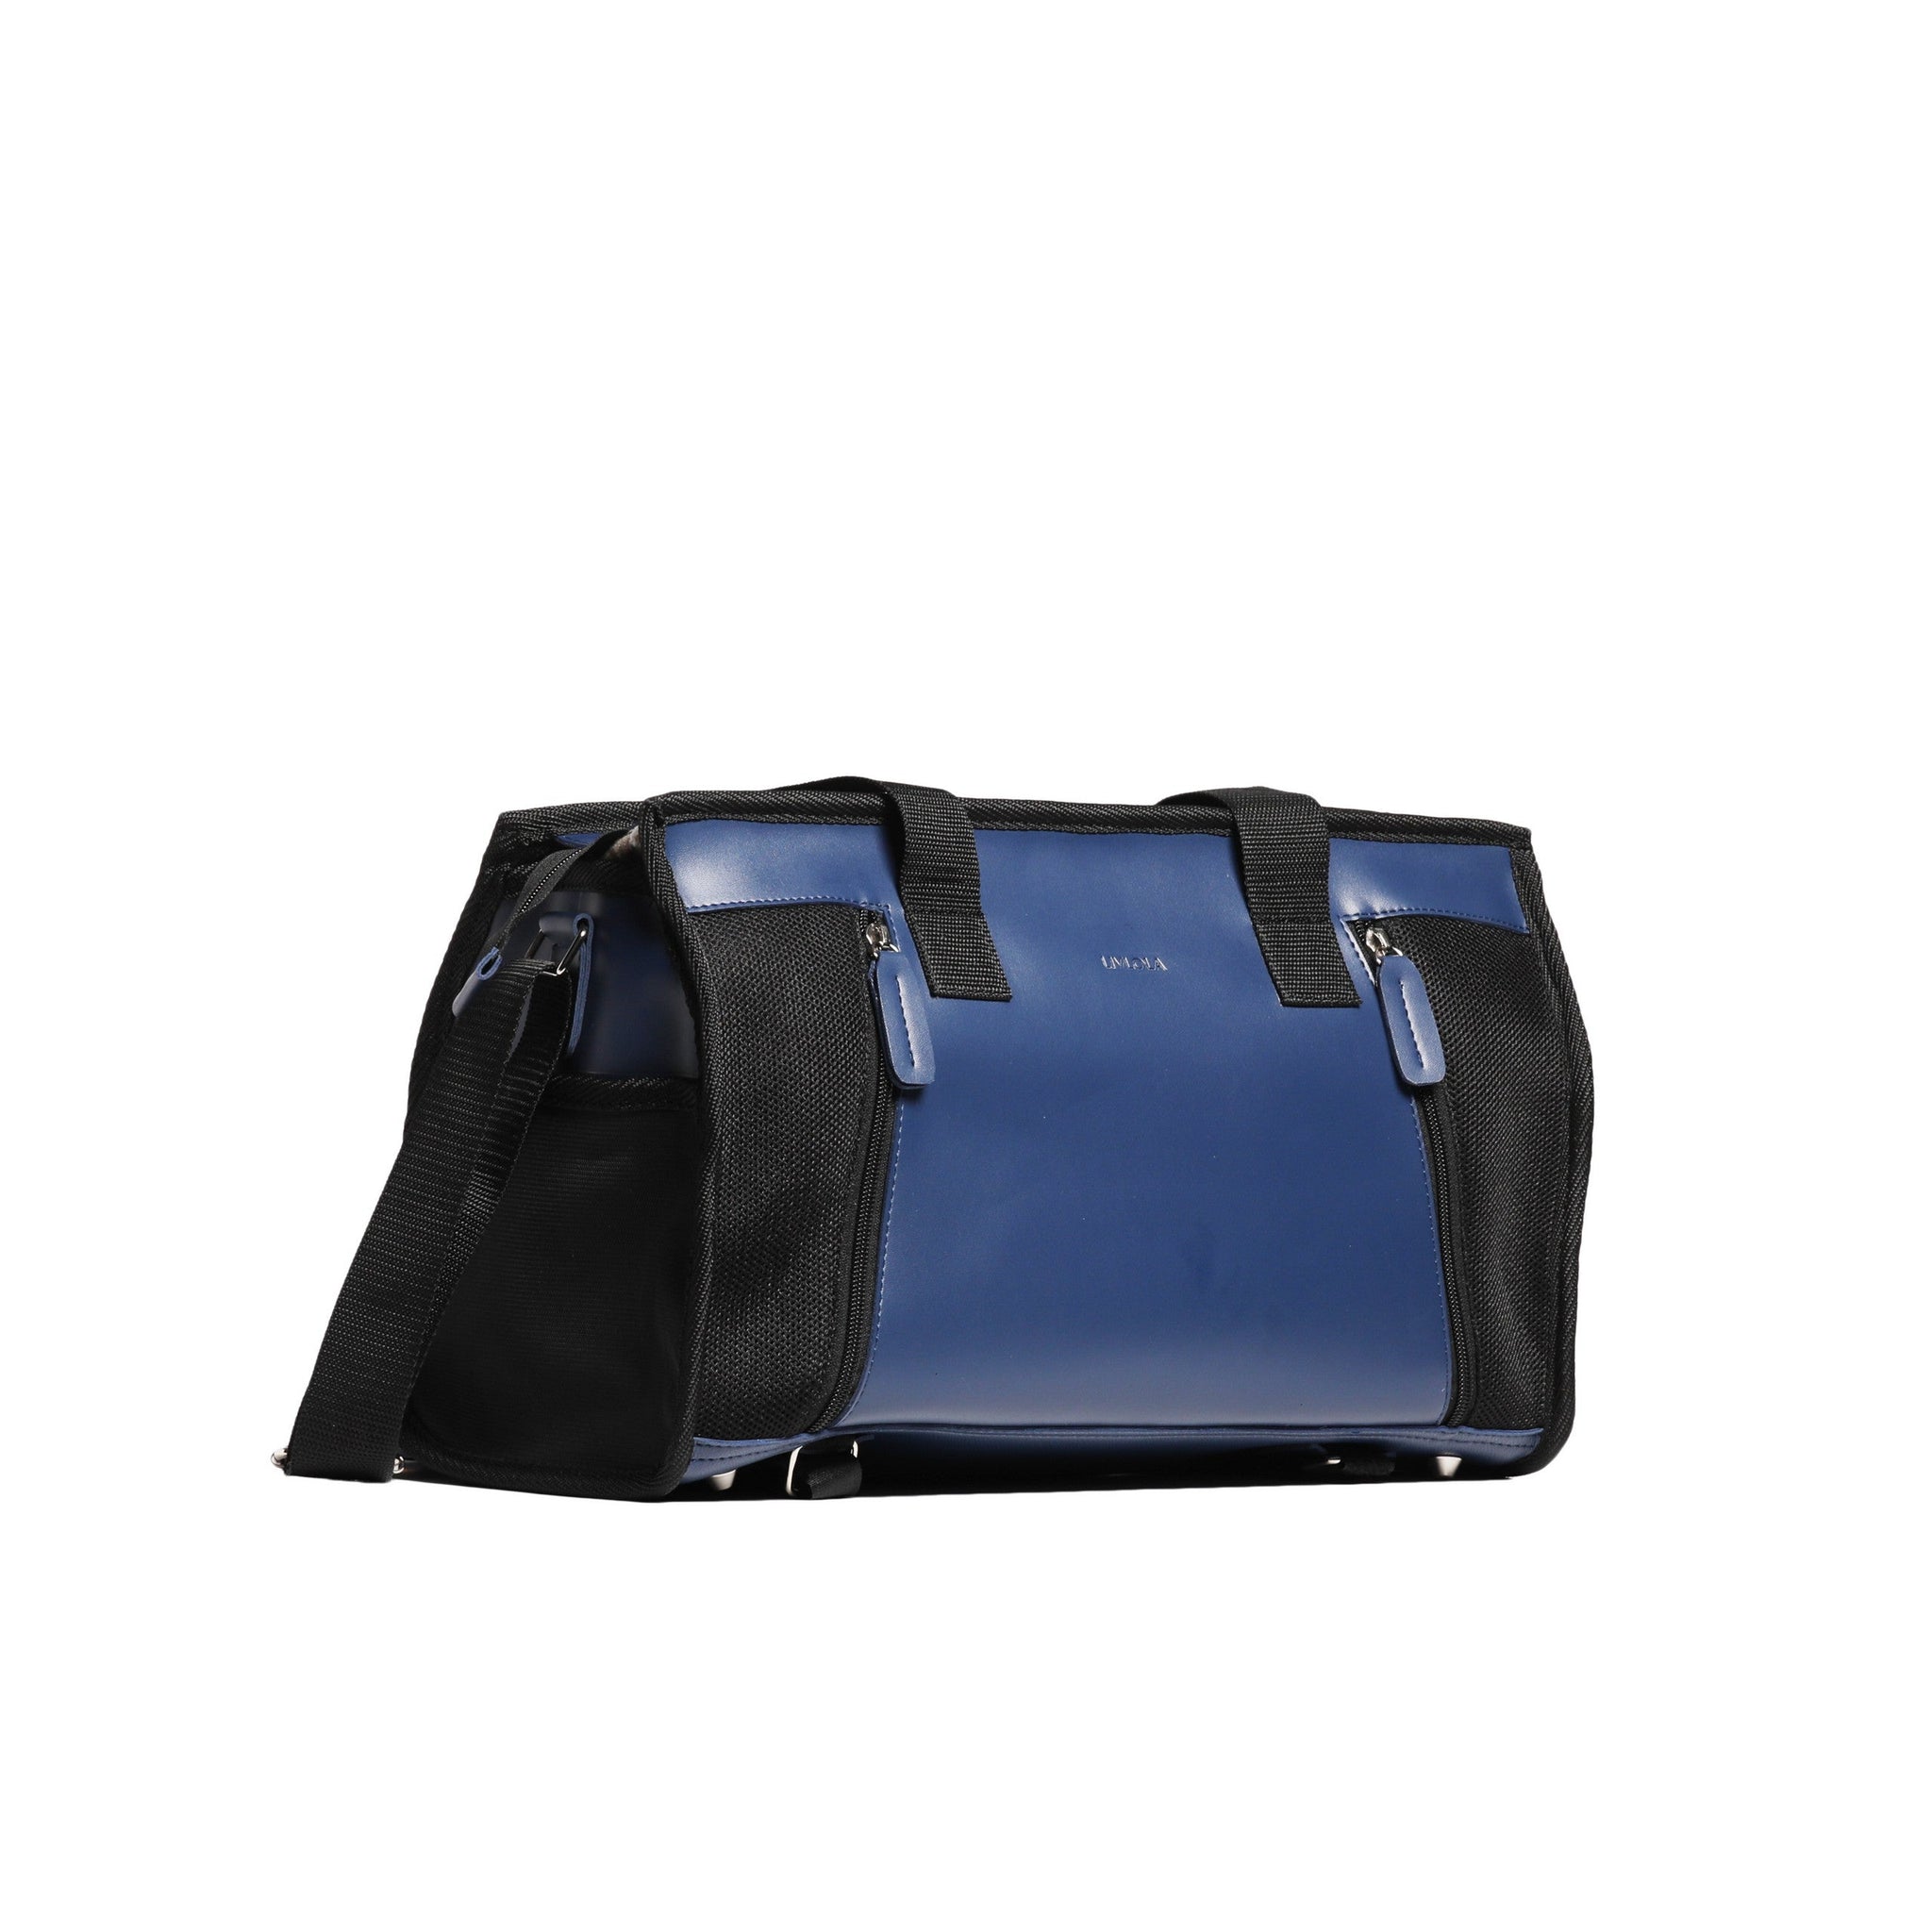 Lakota Mini Duffel Bag in navy blue & black